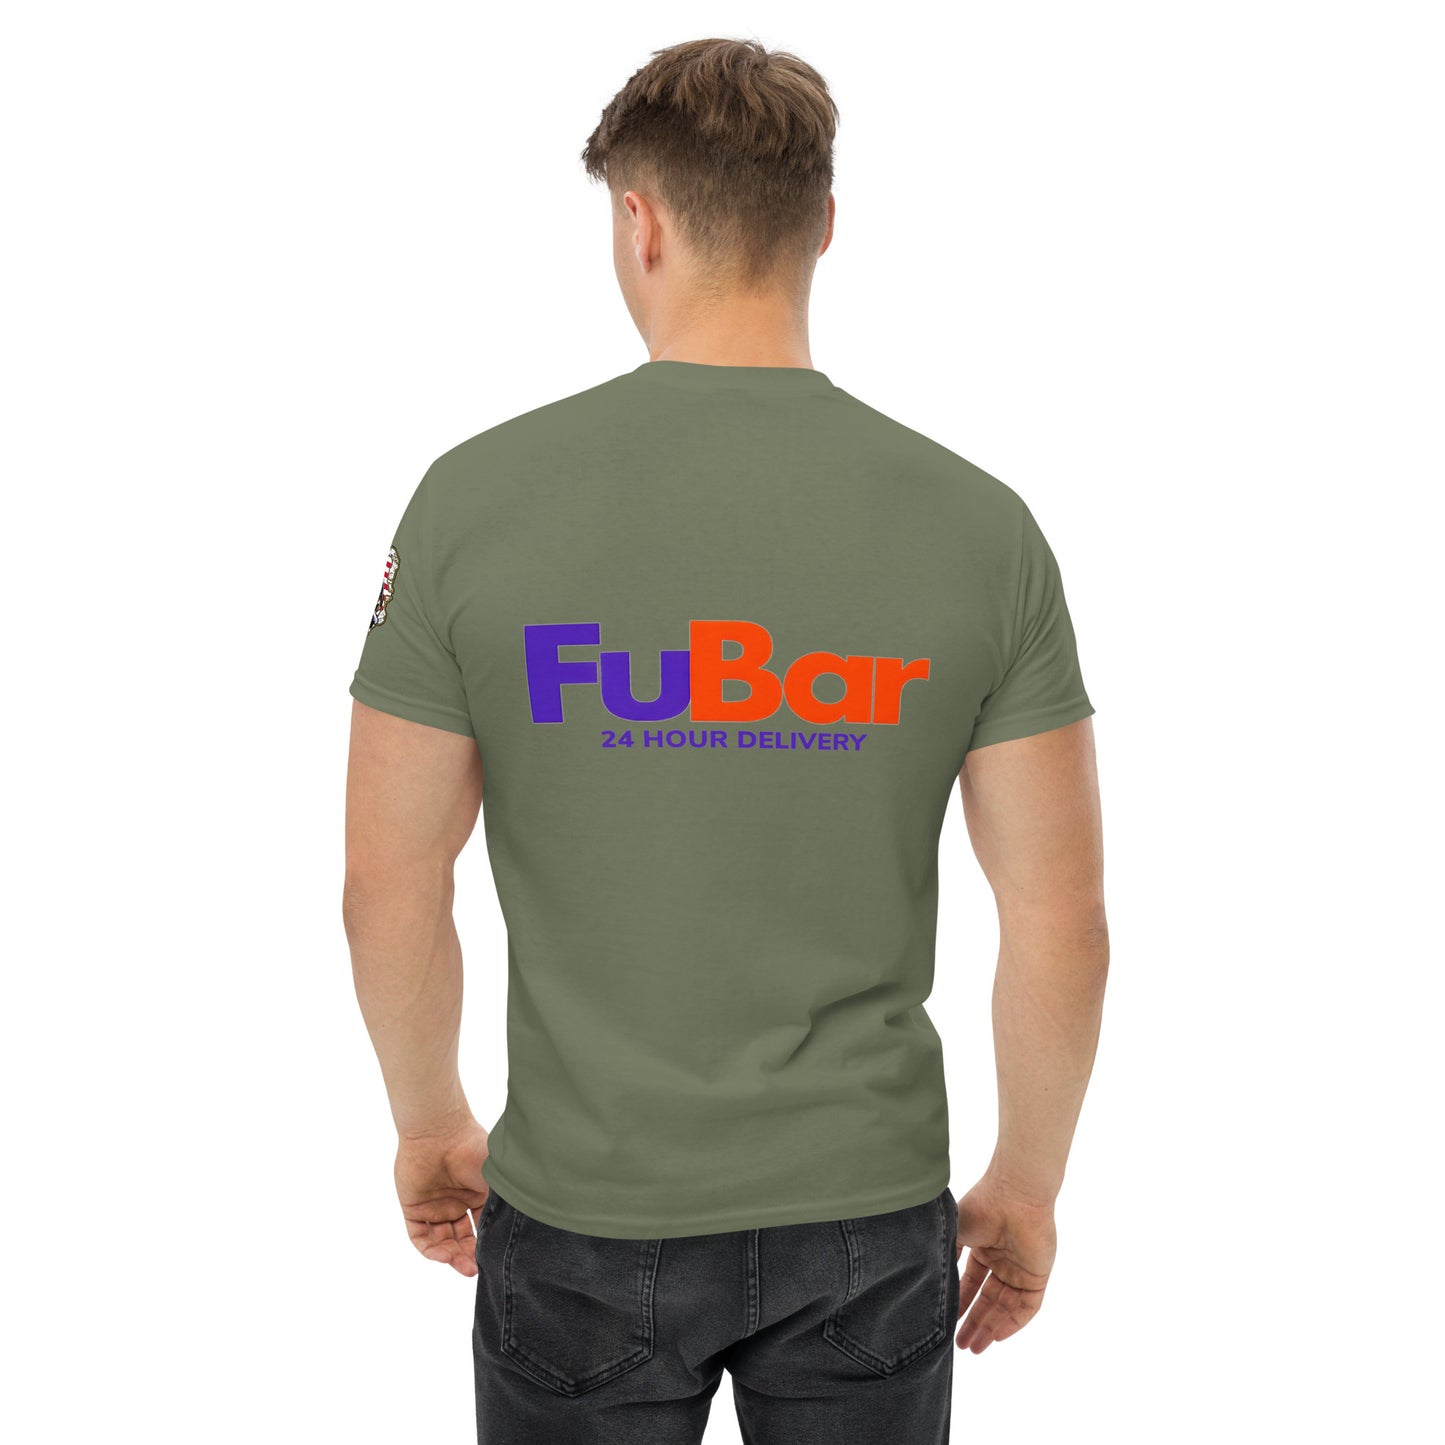 FuBar-24 Hour Delivery